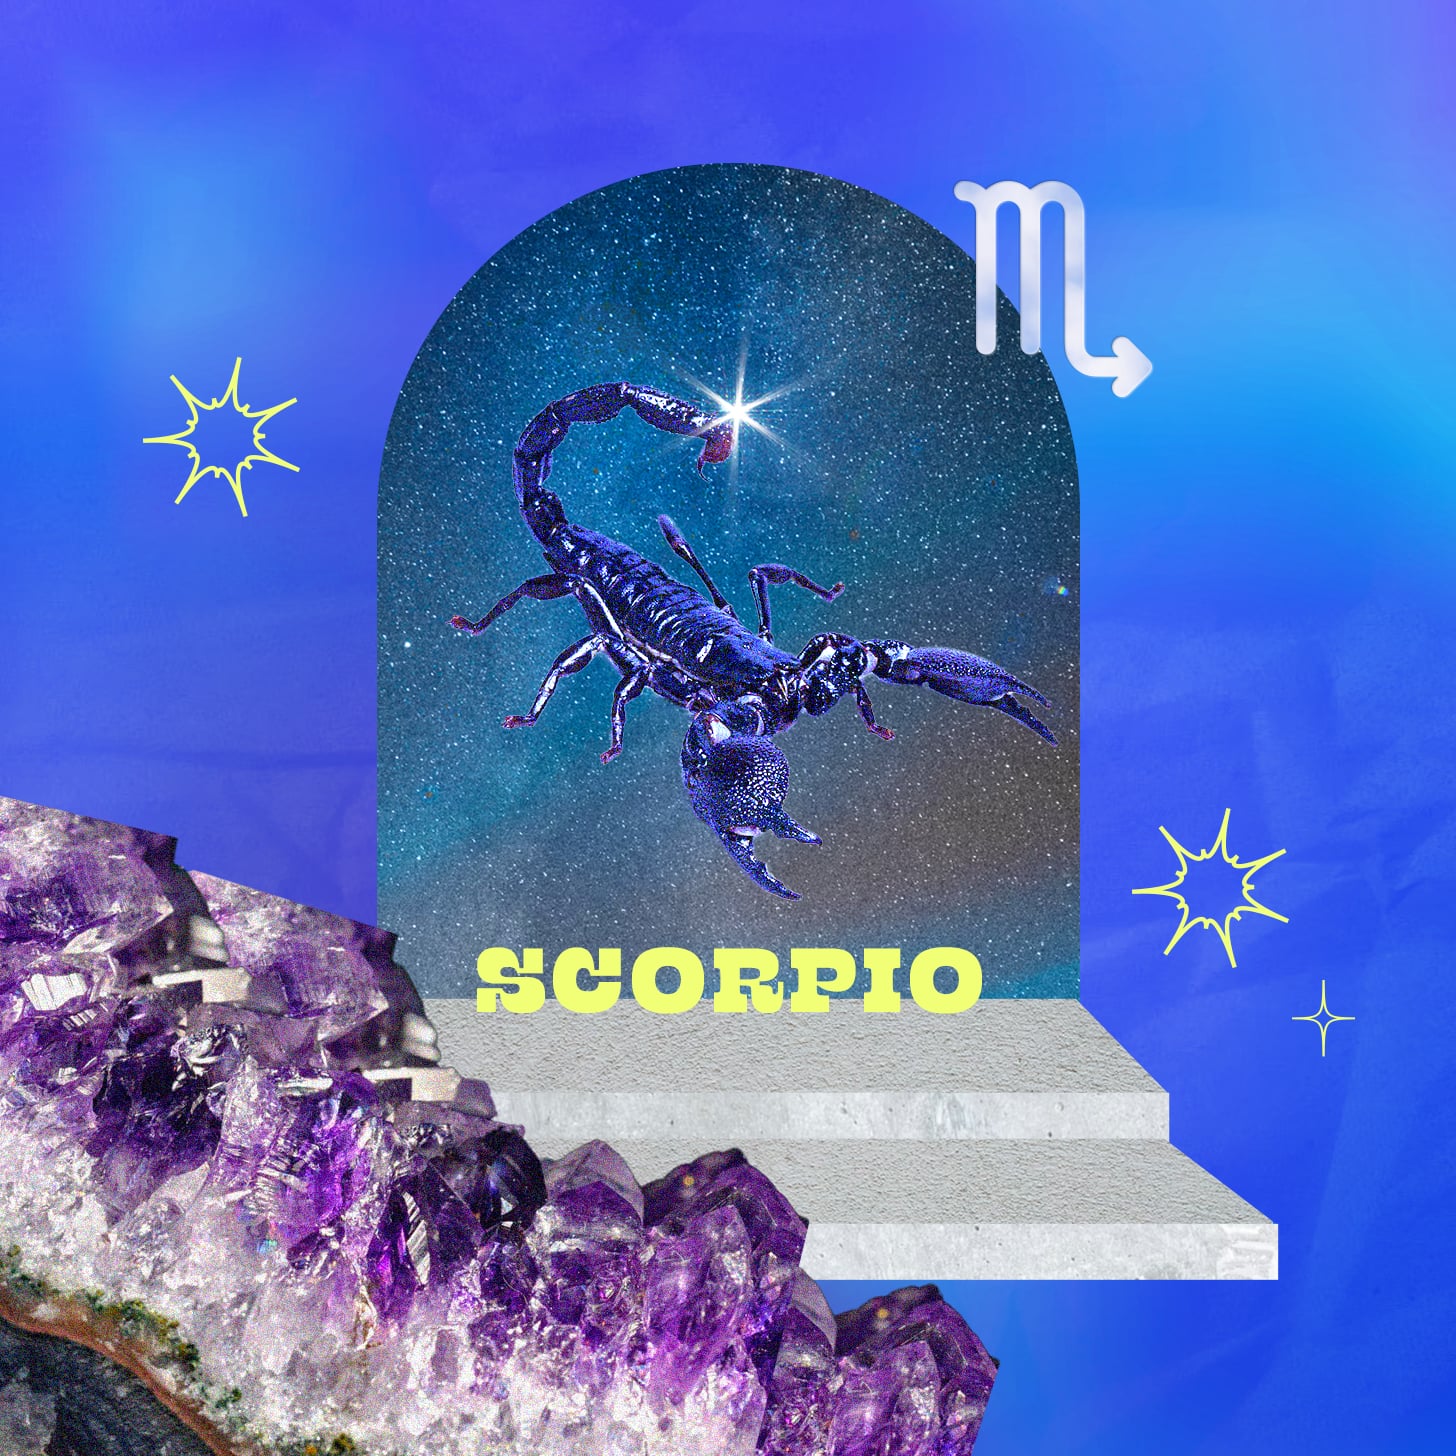 Scorpio weekly horoscope for Nov. 27, 2022